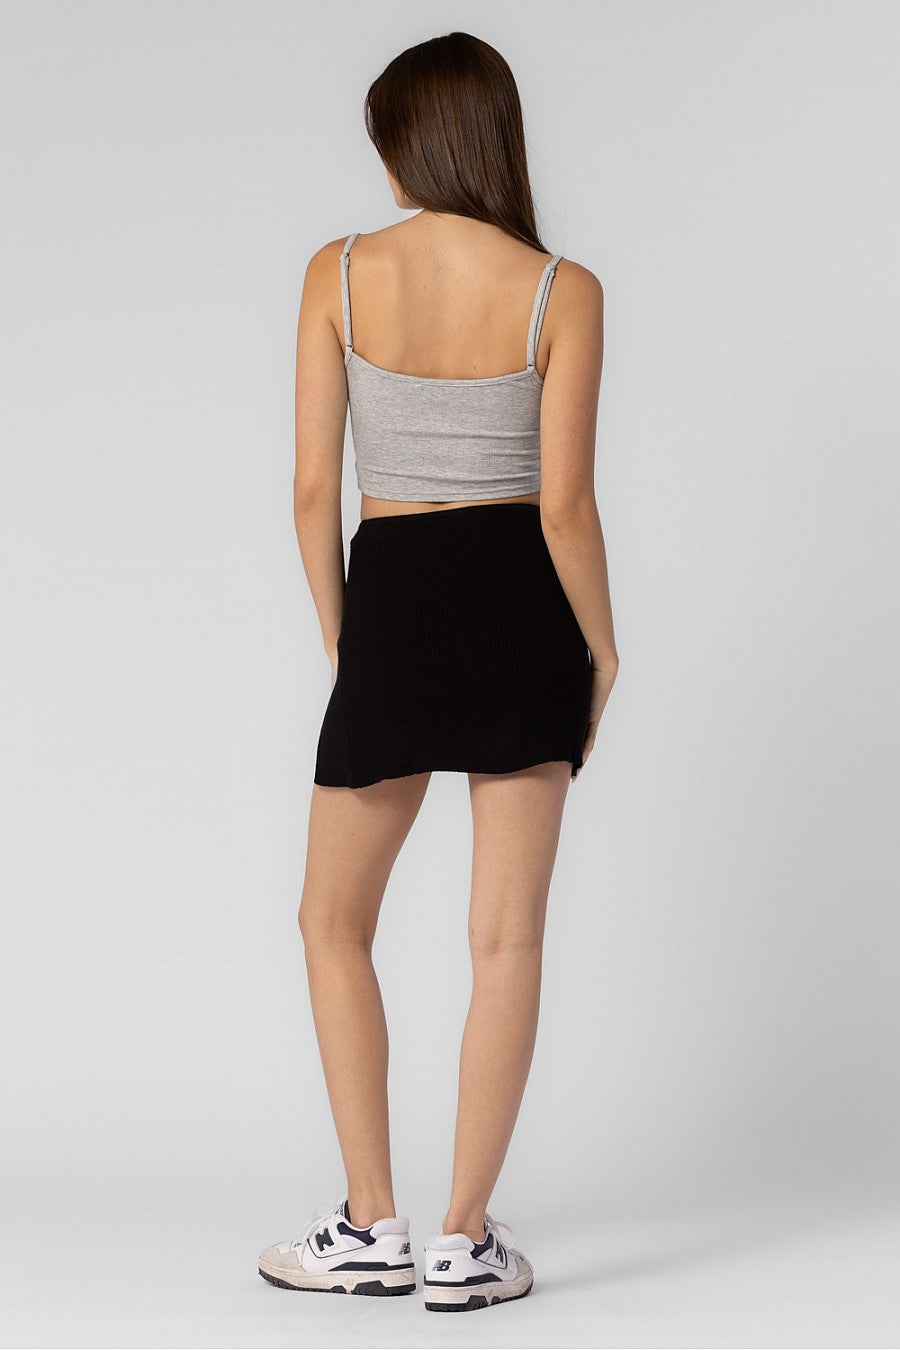 black mini skirt with side slit.